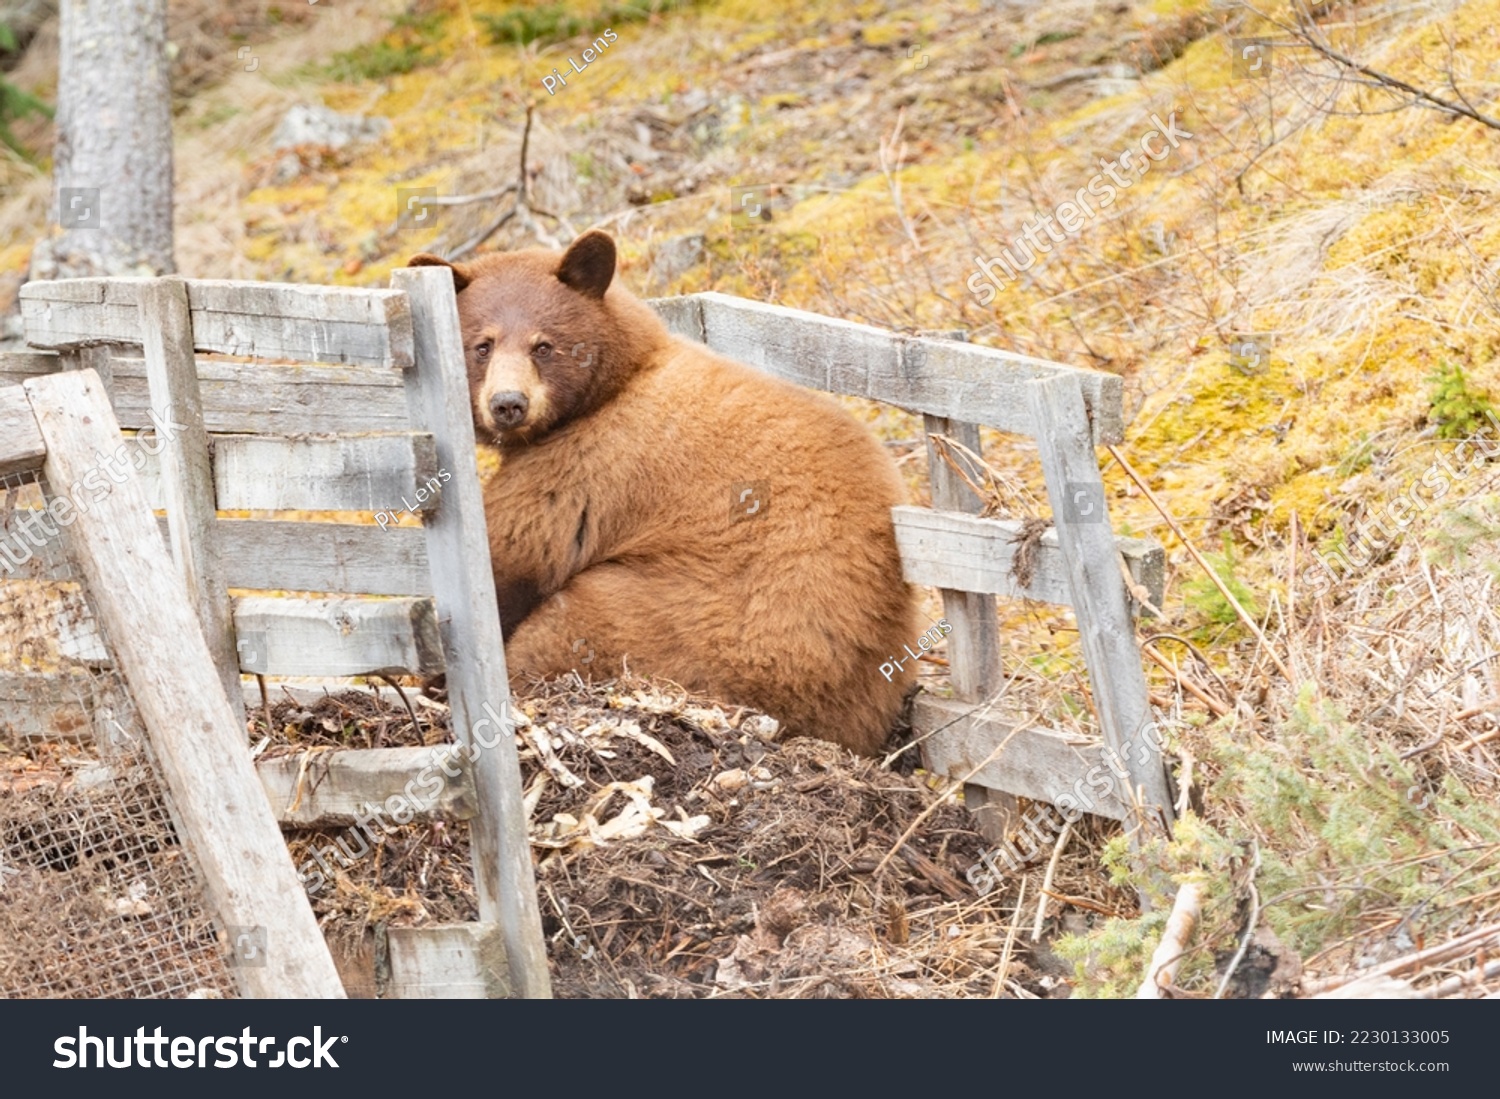 Big fat brown American Black Bear, Ursus americanus, squatting on garden compost searching for food scraps #2230133005